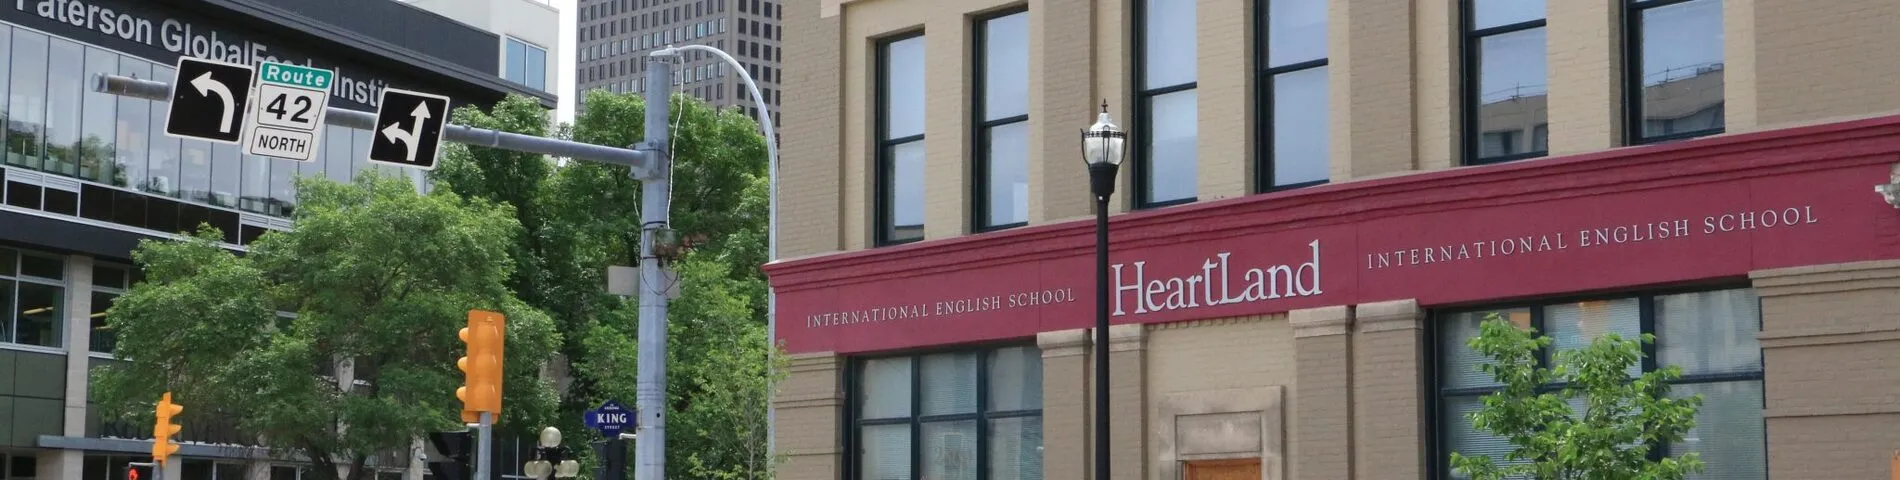 Heartland International English School bild 1